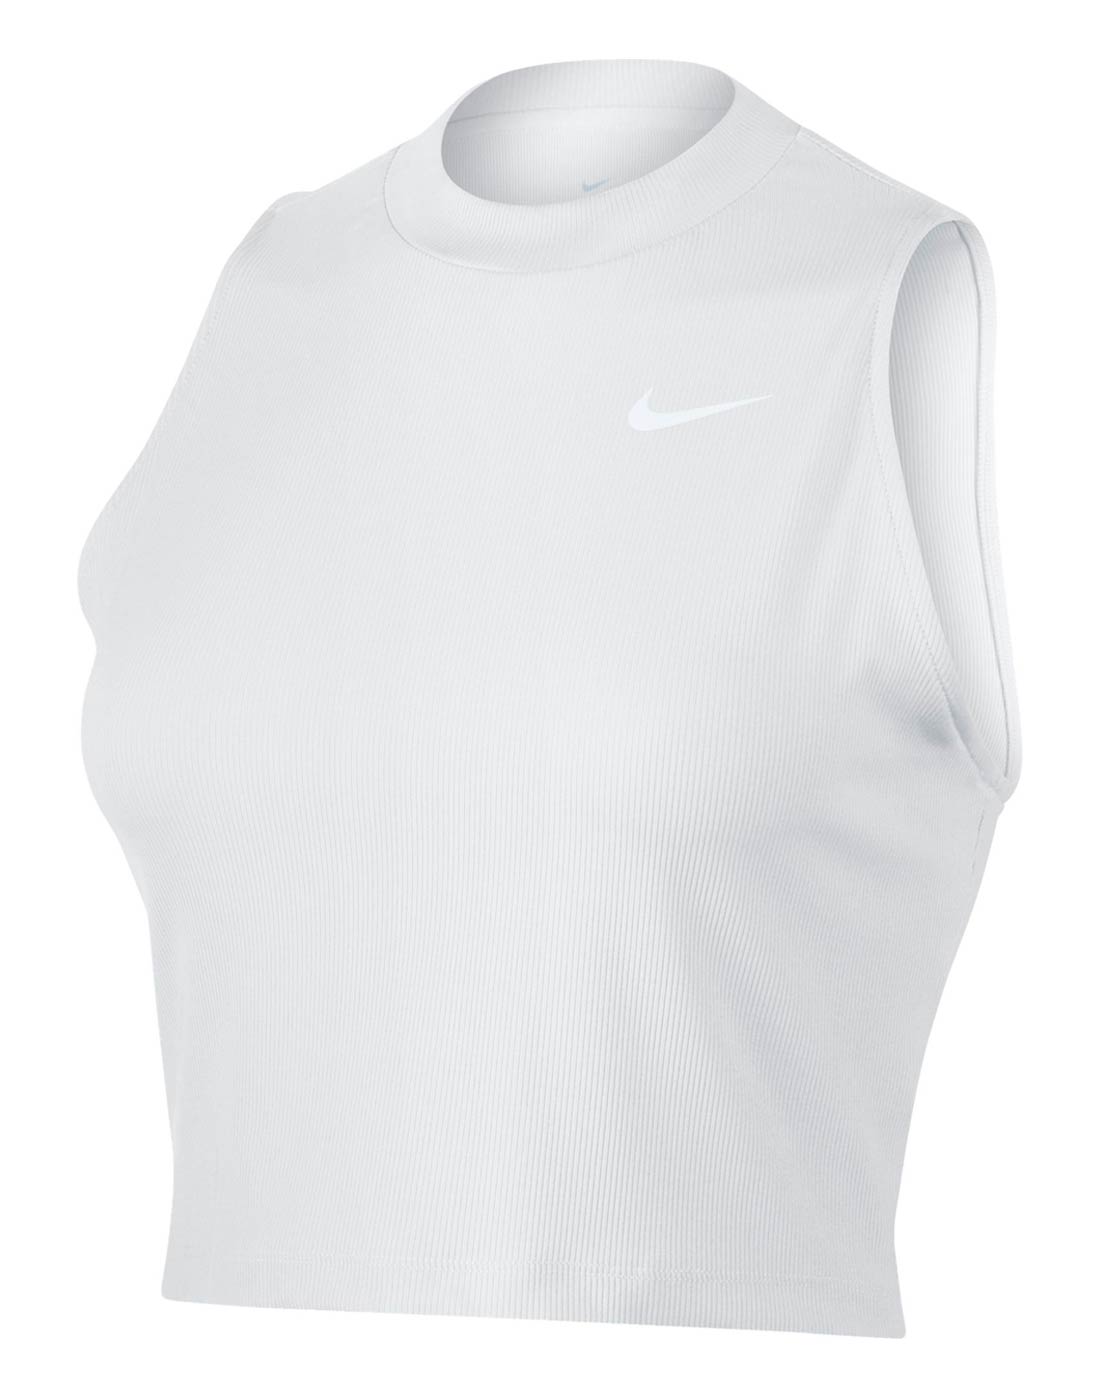 Nike Womens Dry Tank Top - White | Life Style Sports EU